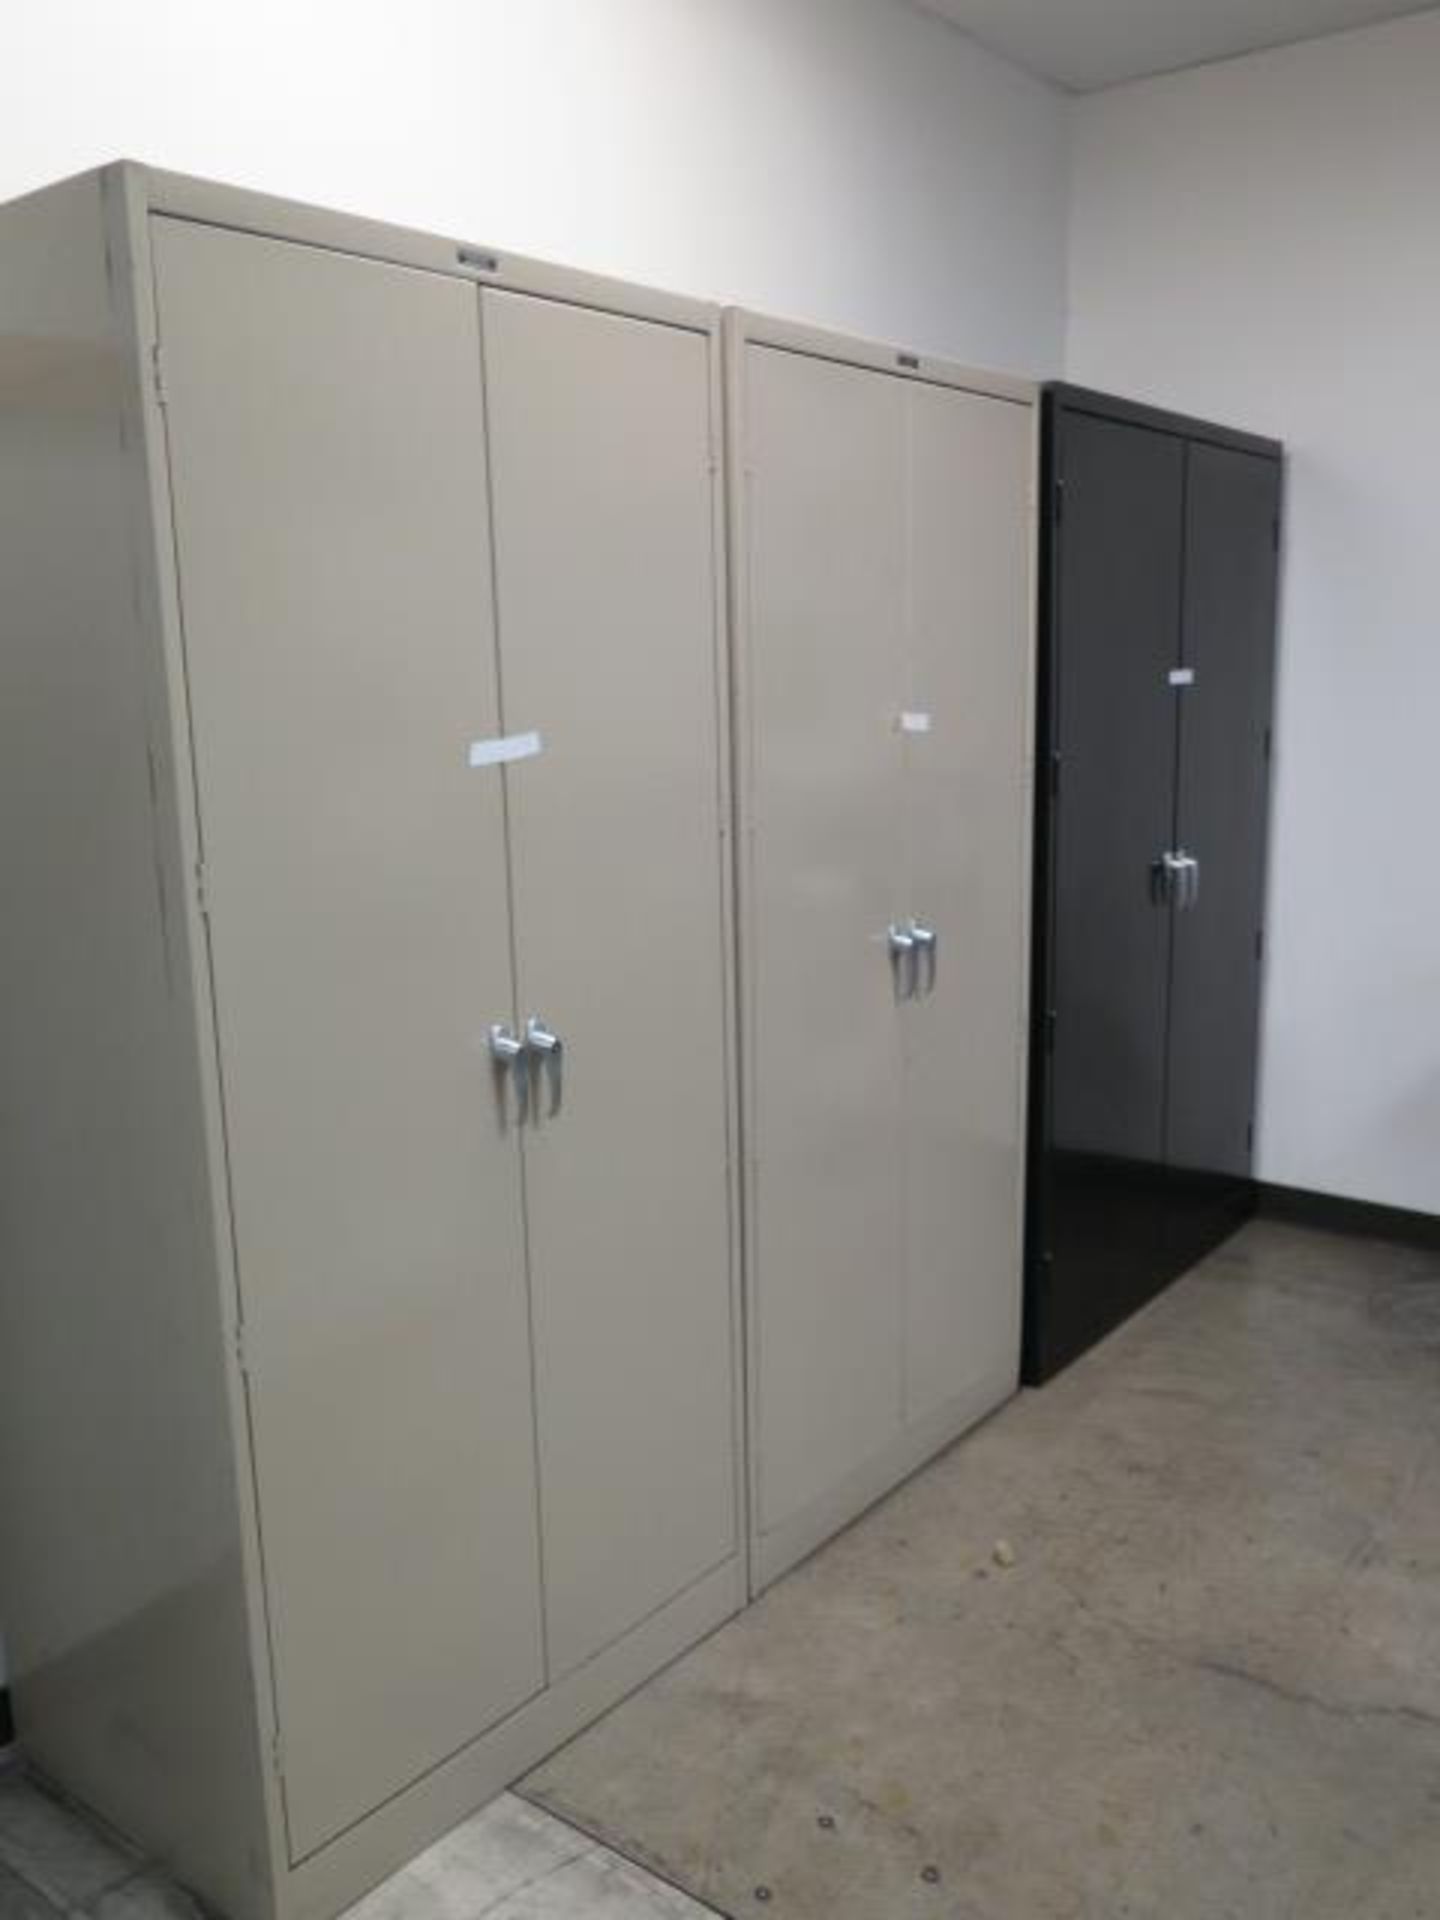 Storage Cabinets (4) - Image 2 of 2